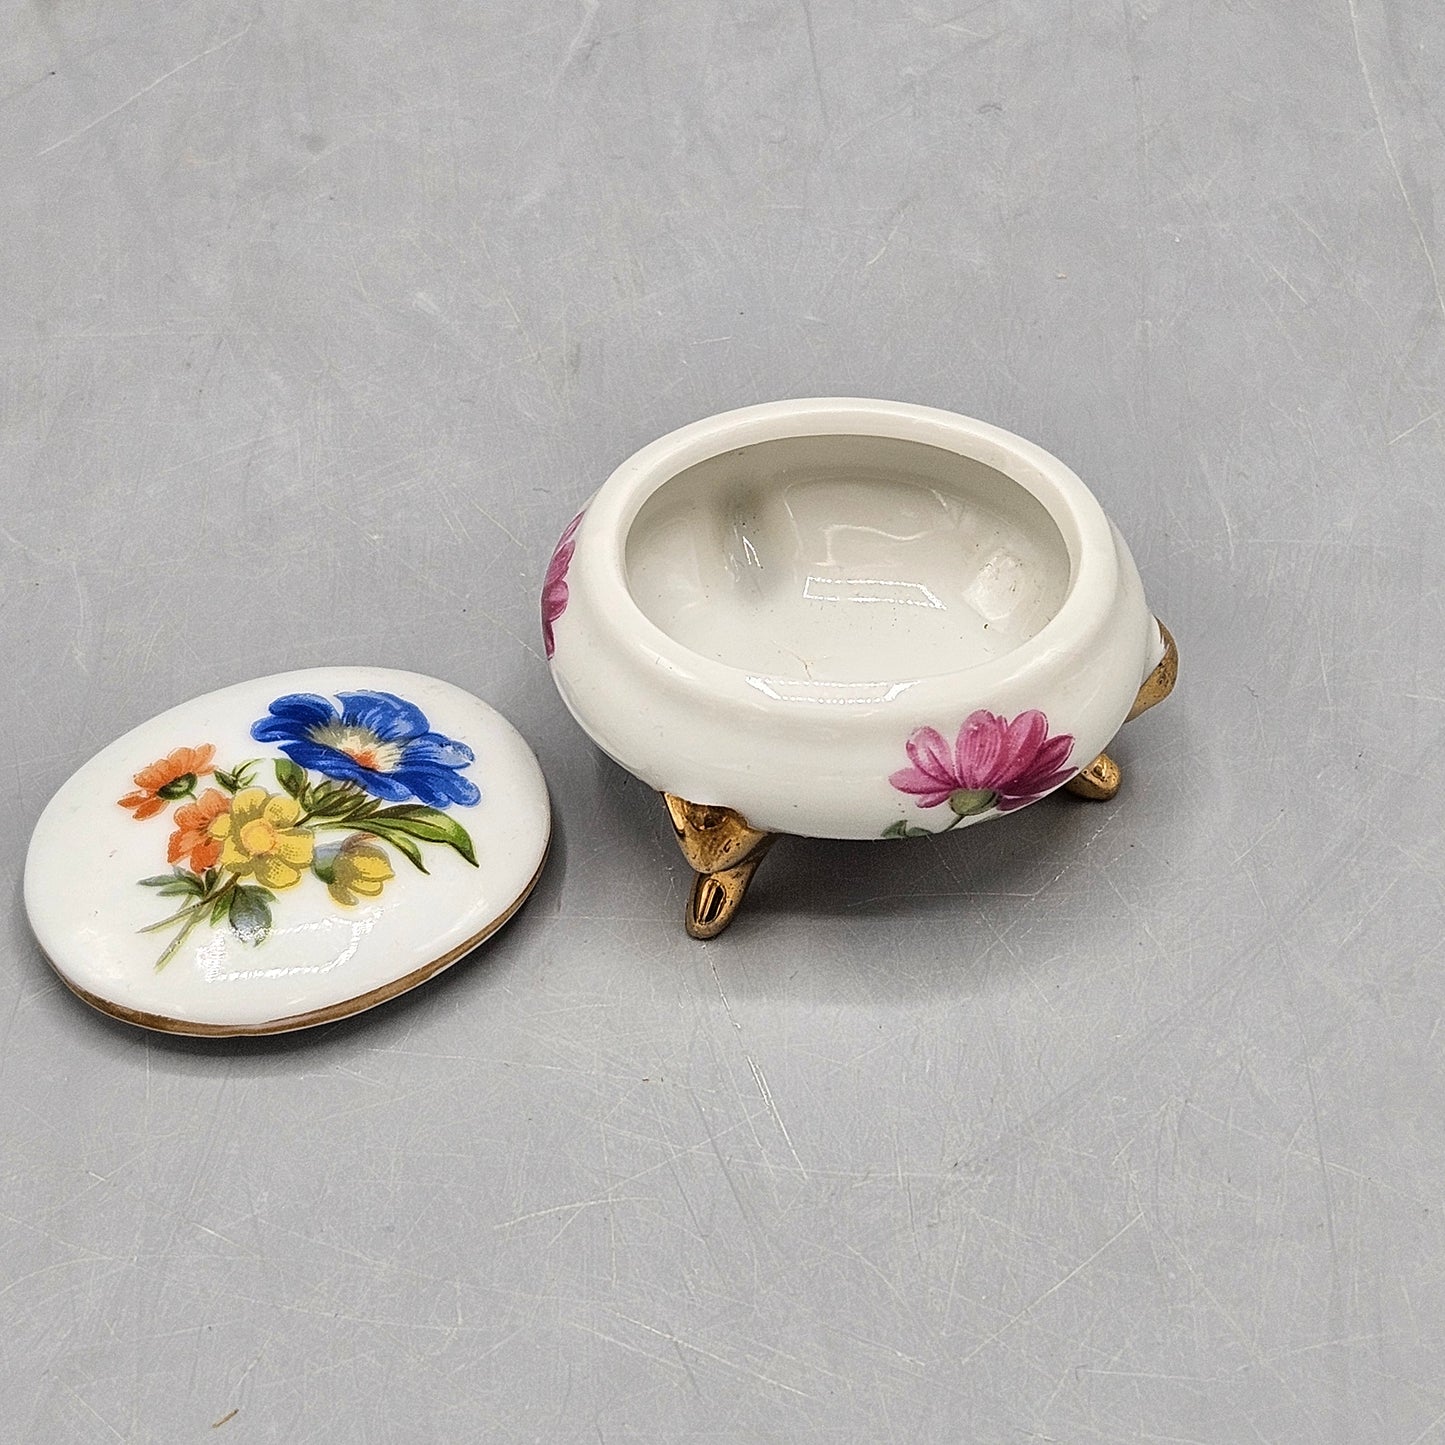 Vintage Handpainted Round Floral Porcelain Trinket Box